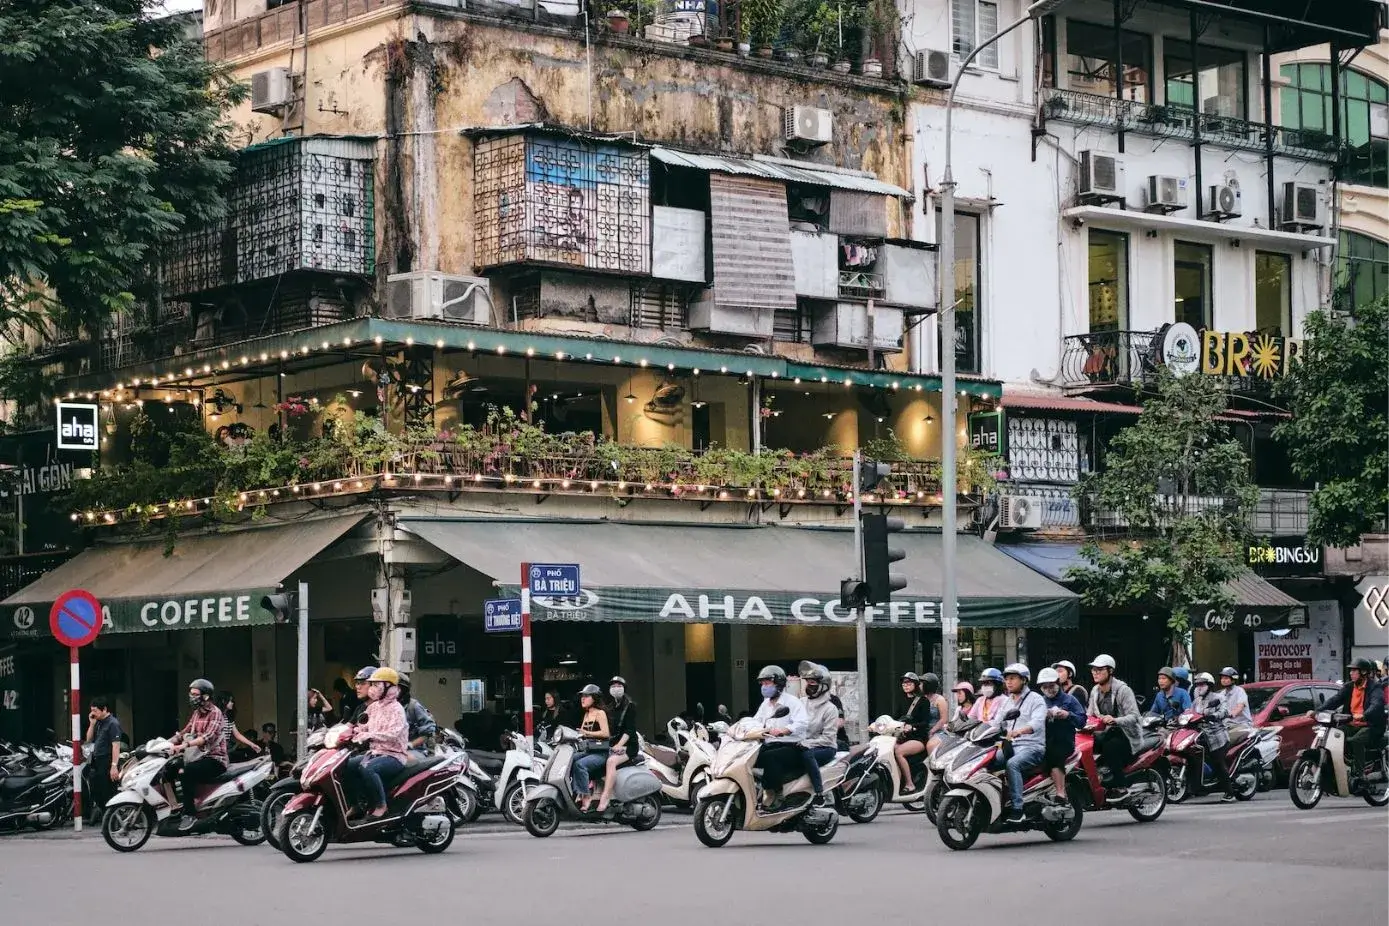 Motorbike traffic in Vietnam